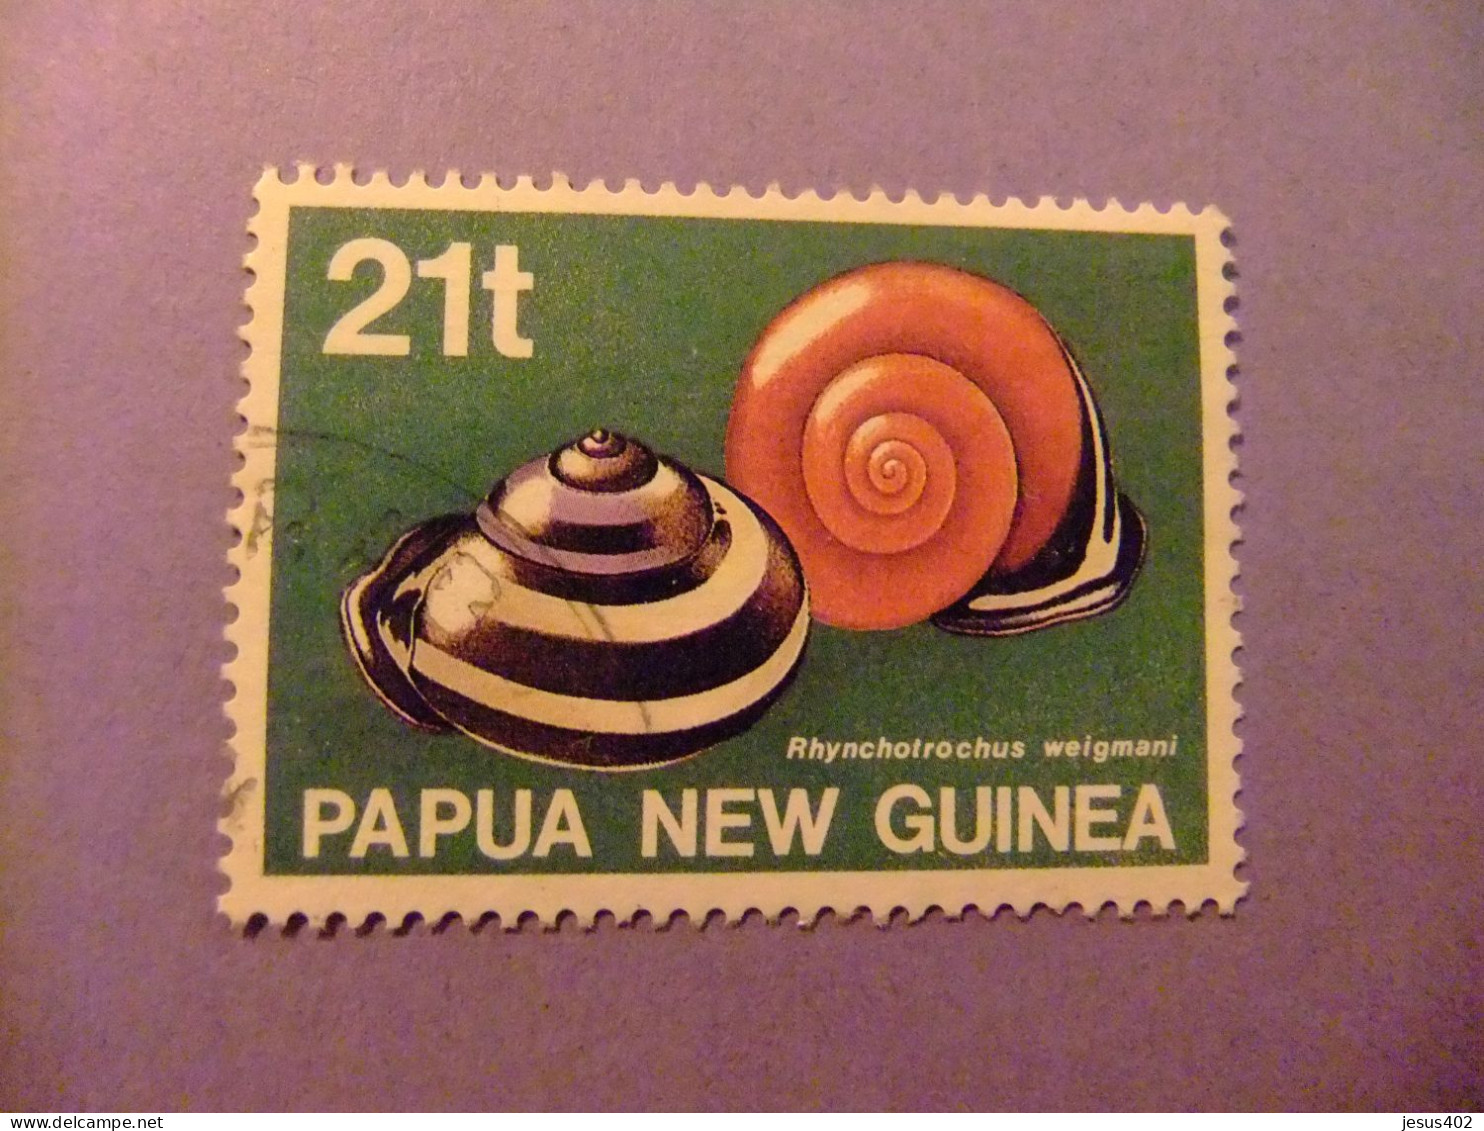 52 PAPUA - NEW GUINEA - NUEVA GUINEA 1991 / FAUNA  RHYNCHOTROCHUS WEIGMANI / YVERT 626 FU - Coneshells